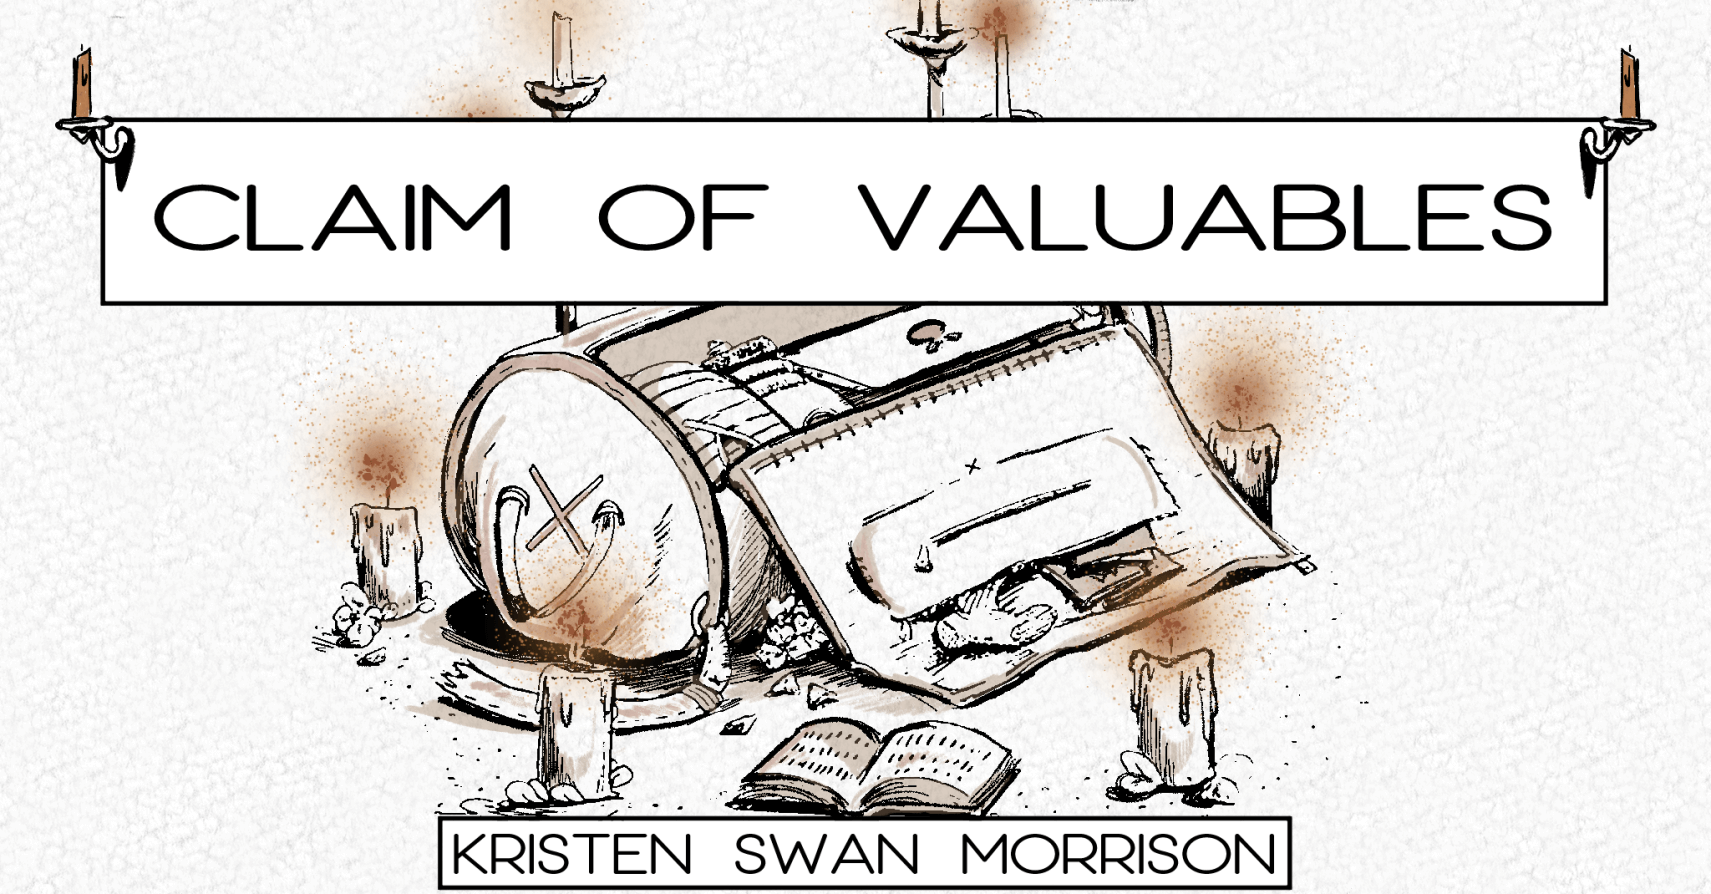 CLAIM OF VALUABLES by Kristen Swan Morrison